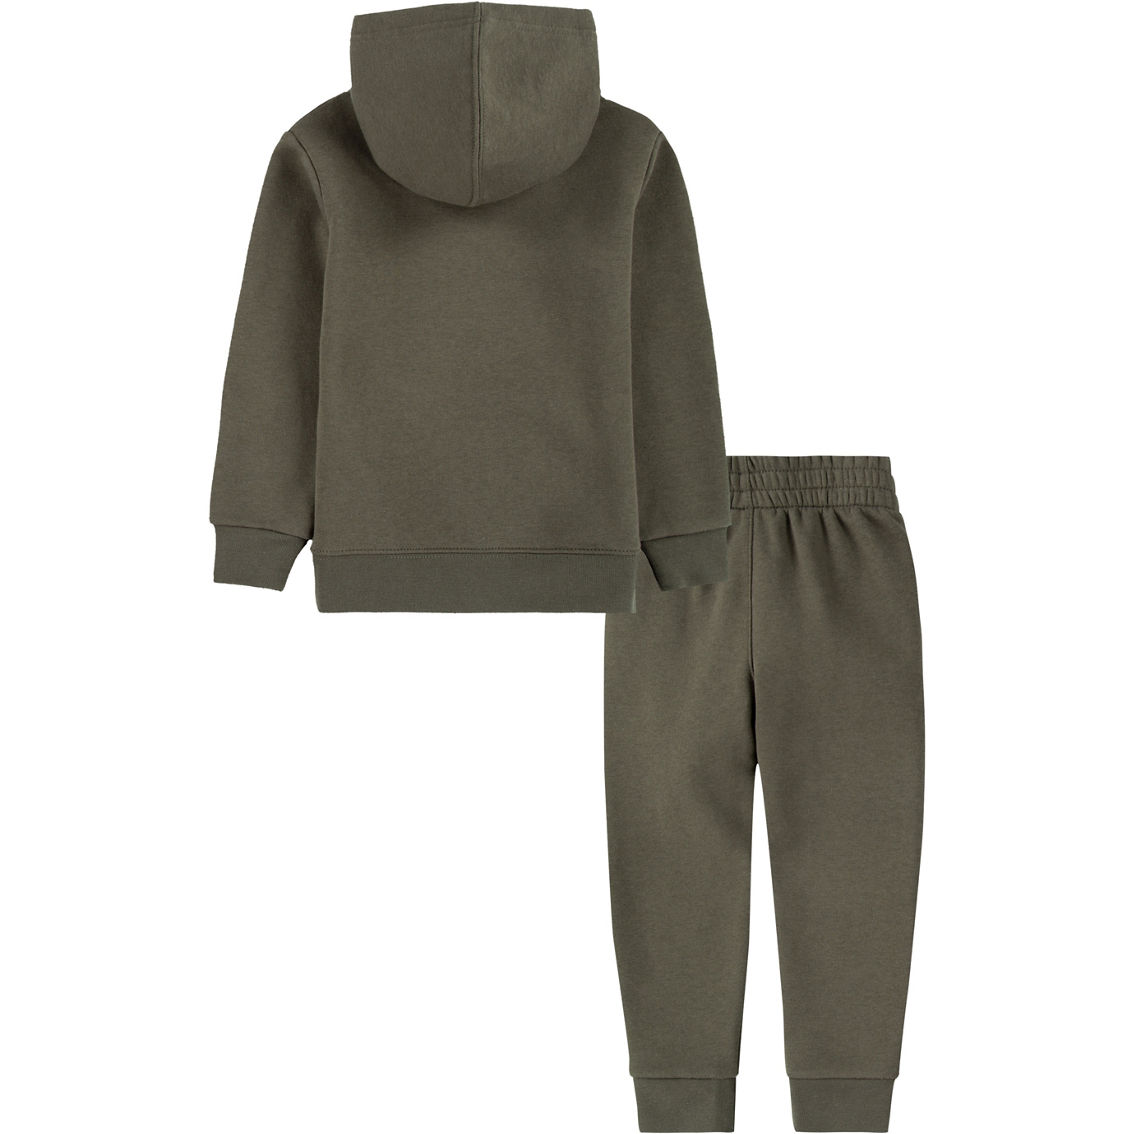 Nike Boys Futura Camo Fleece Pullover and Pants 2 pc. Set - Image 2 of 3